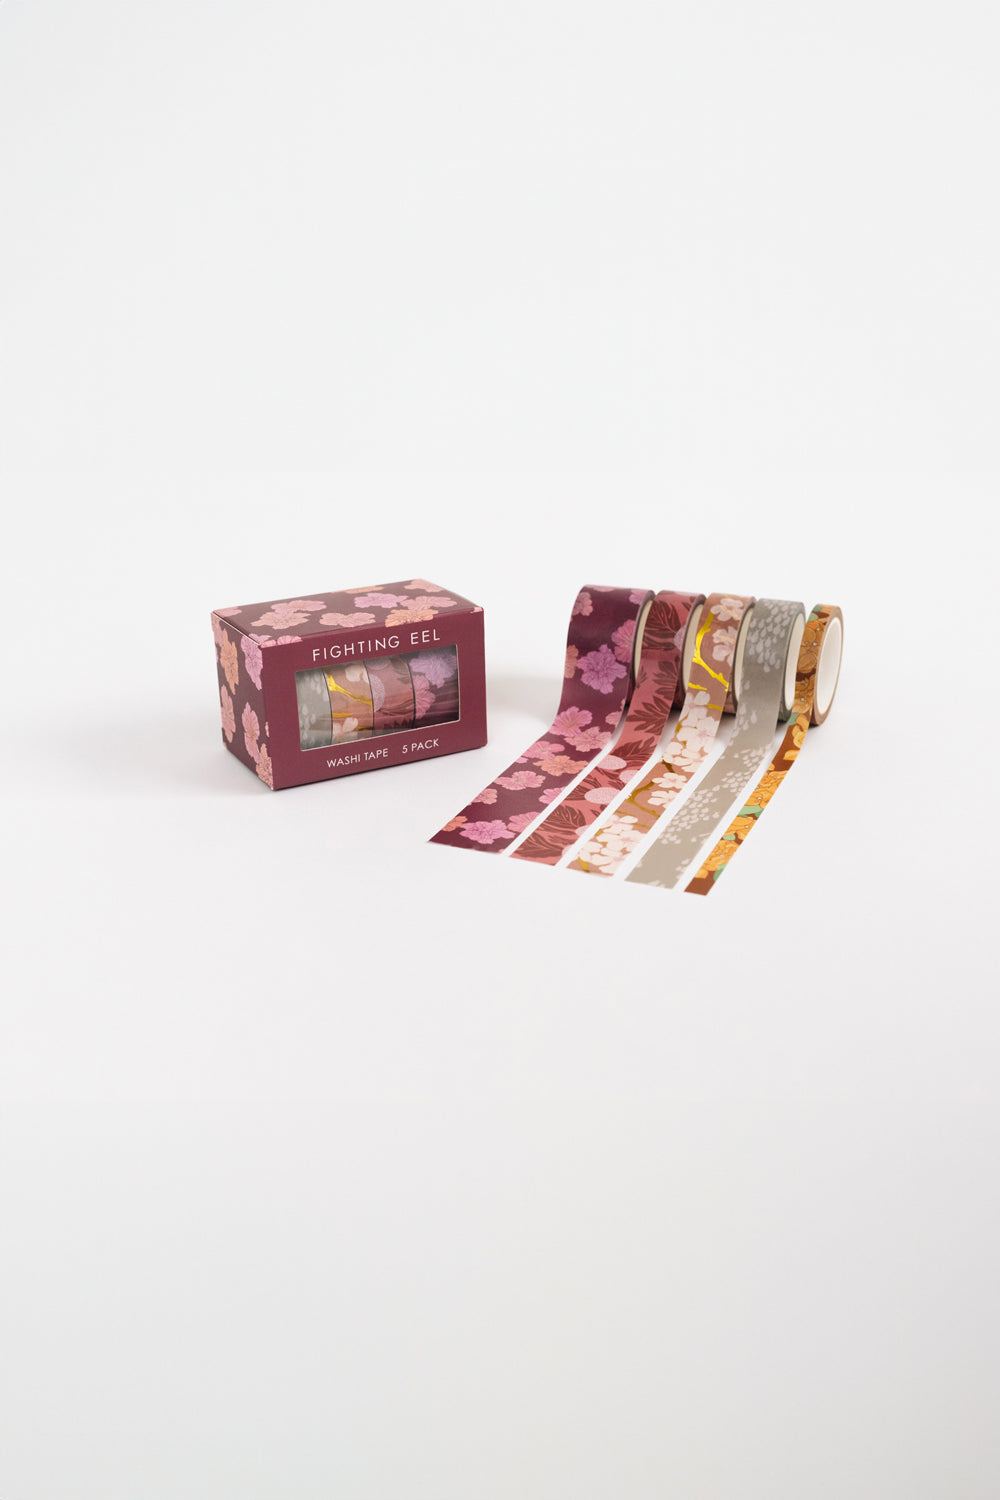 Washi Tape 5 Pack - Hibiscus